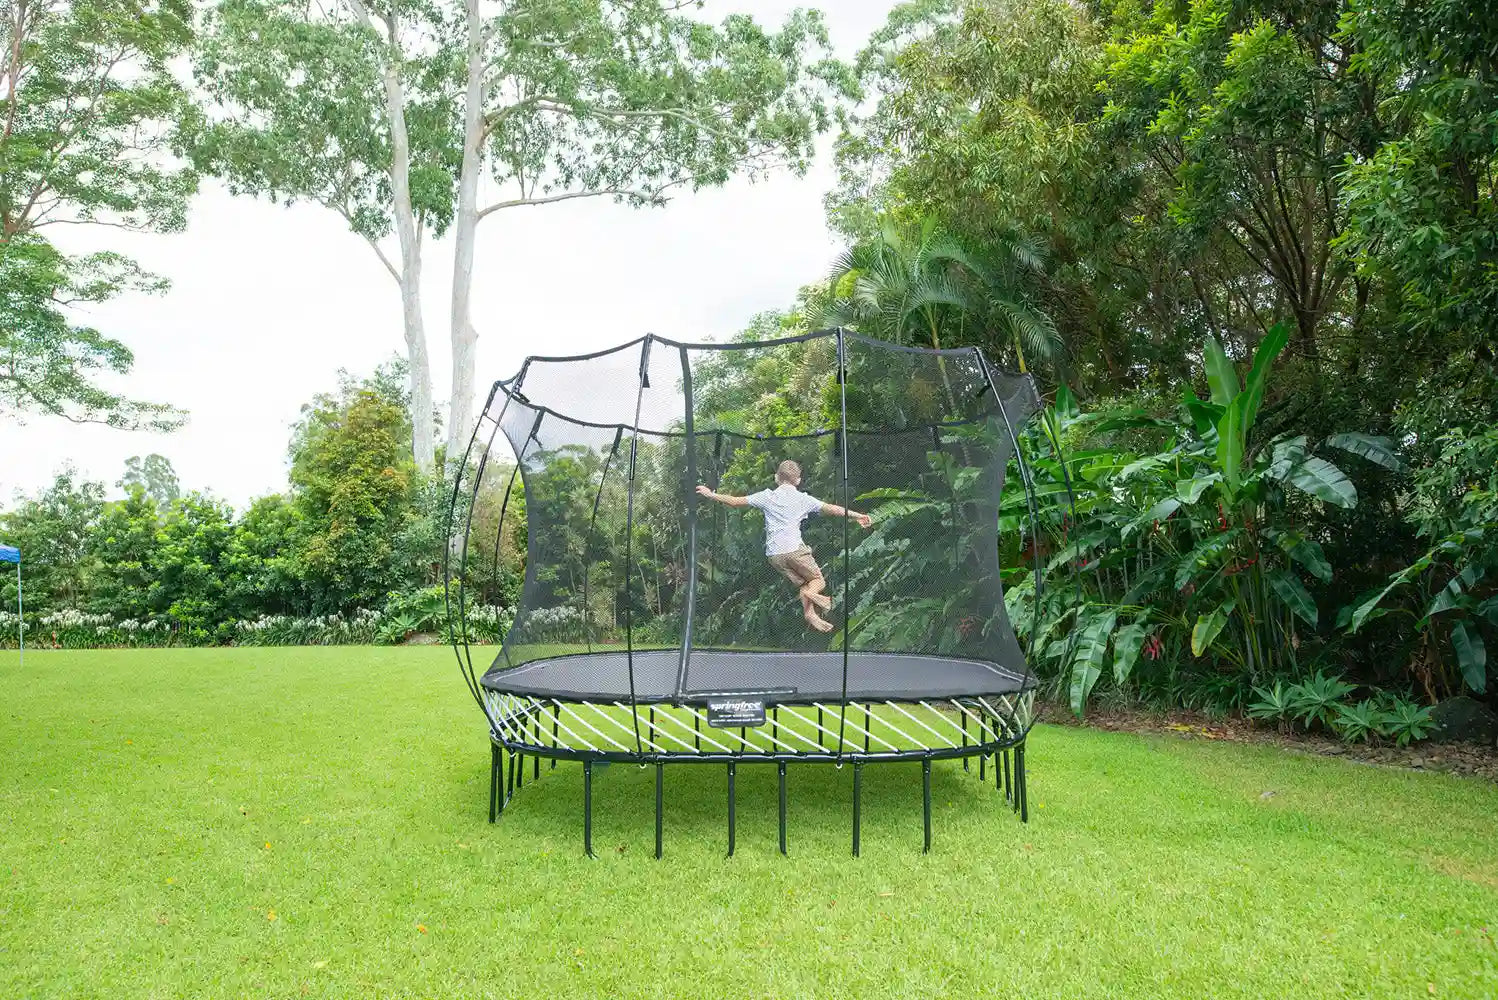 a boy jumping on an outdoor trampoline